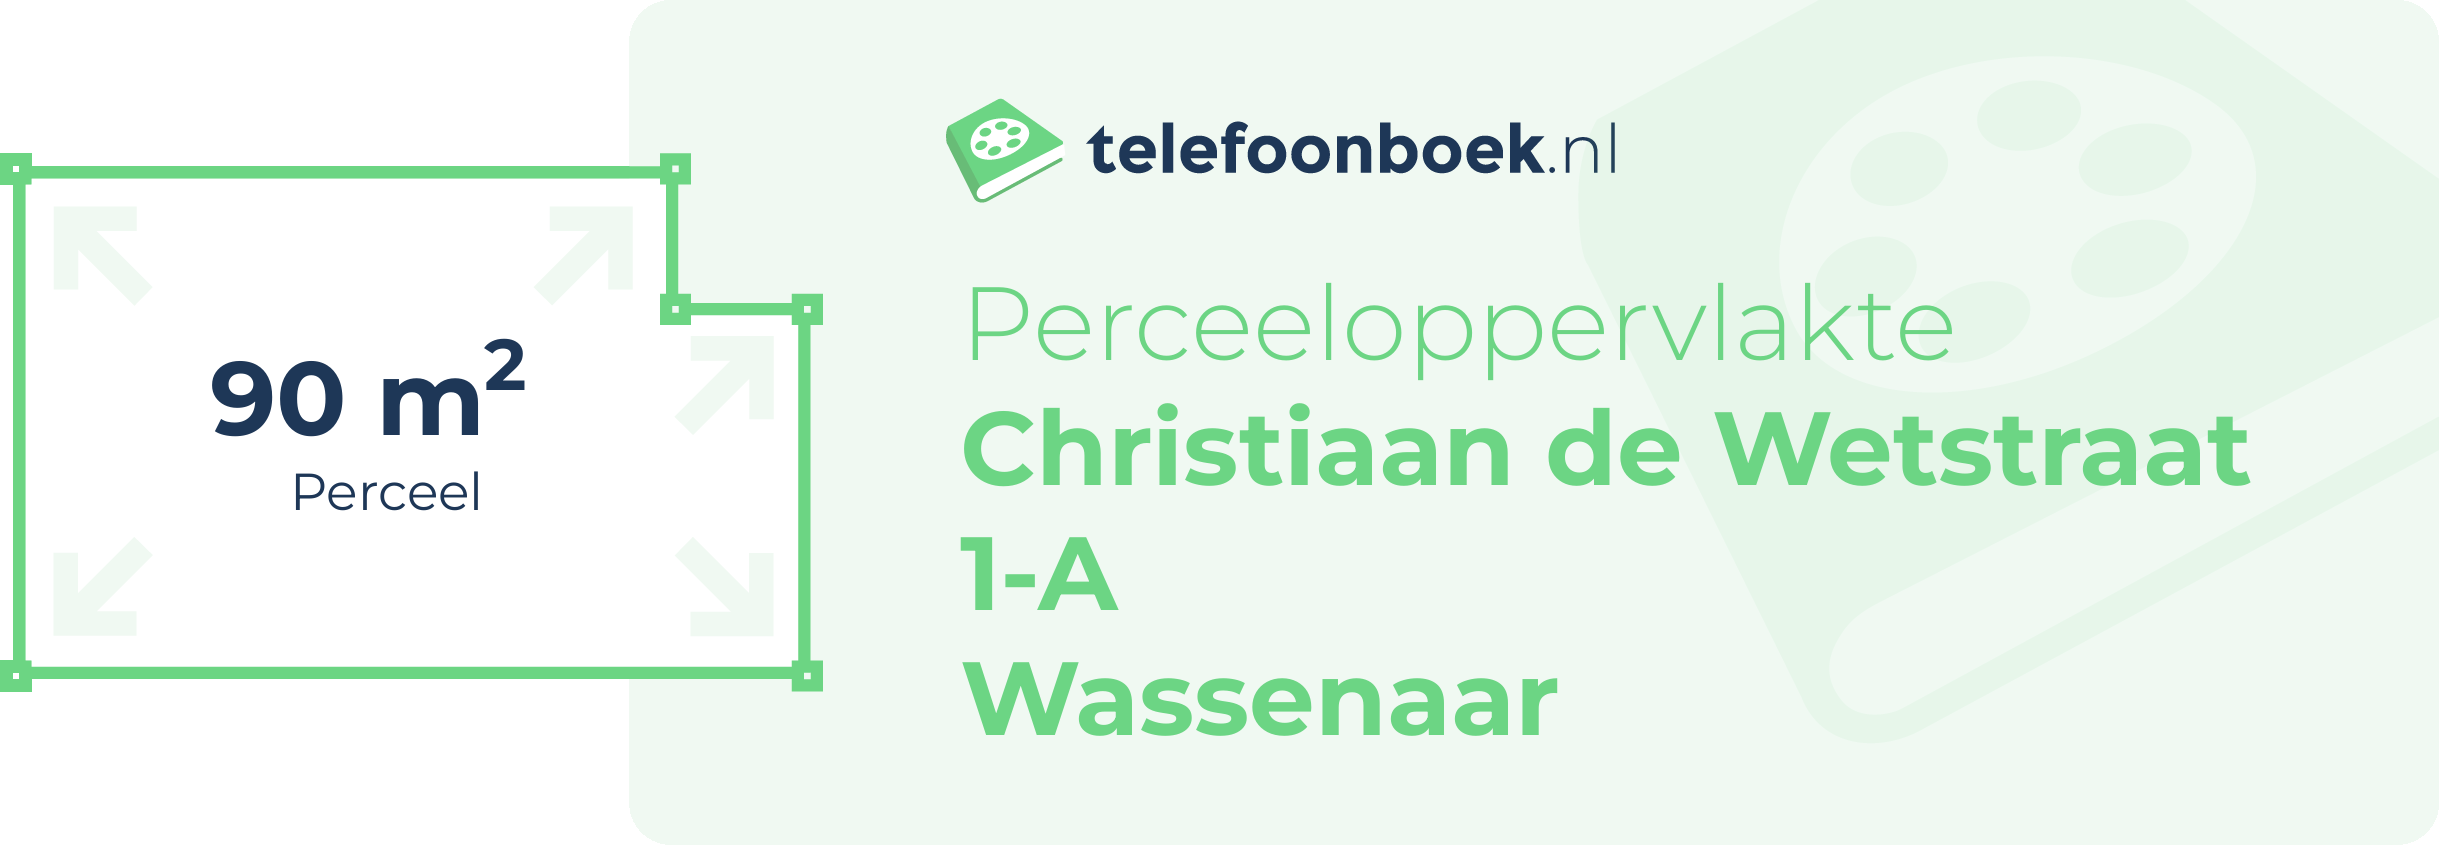 Perceeloppervlakte Christiaan De Wetstraat 1-A Wassenaar